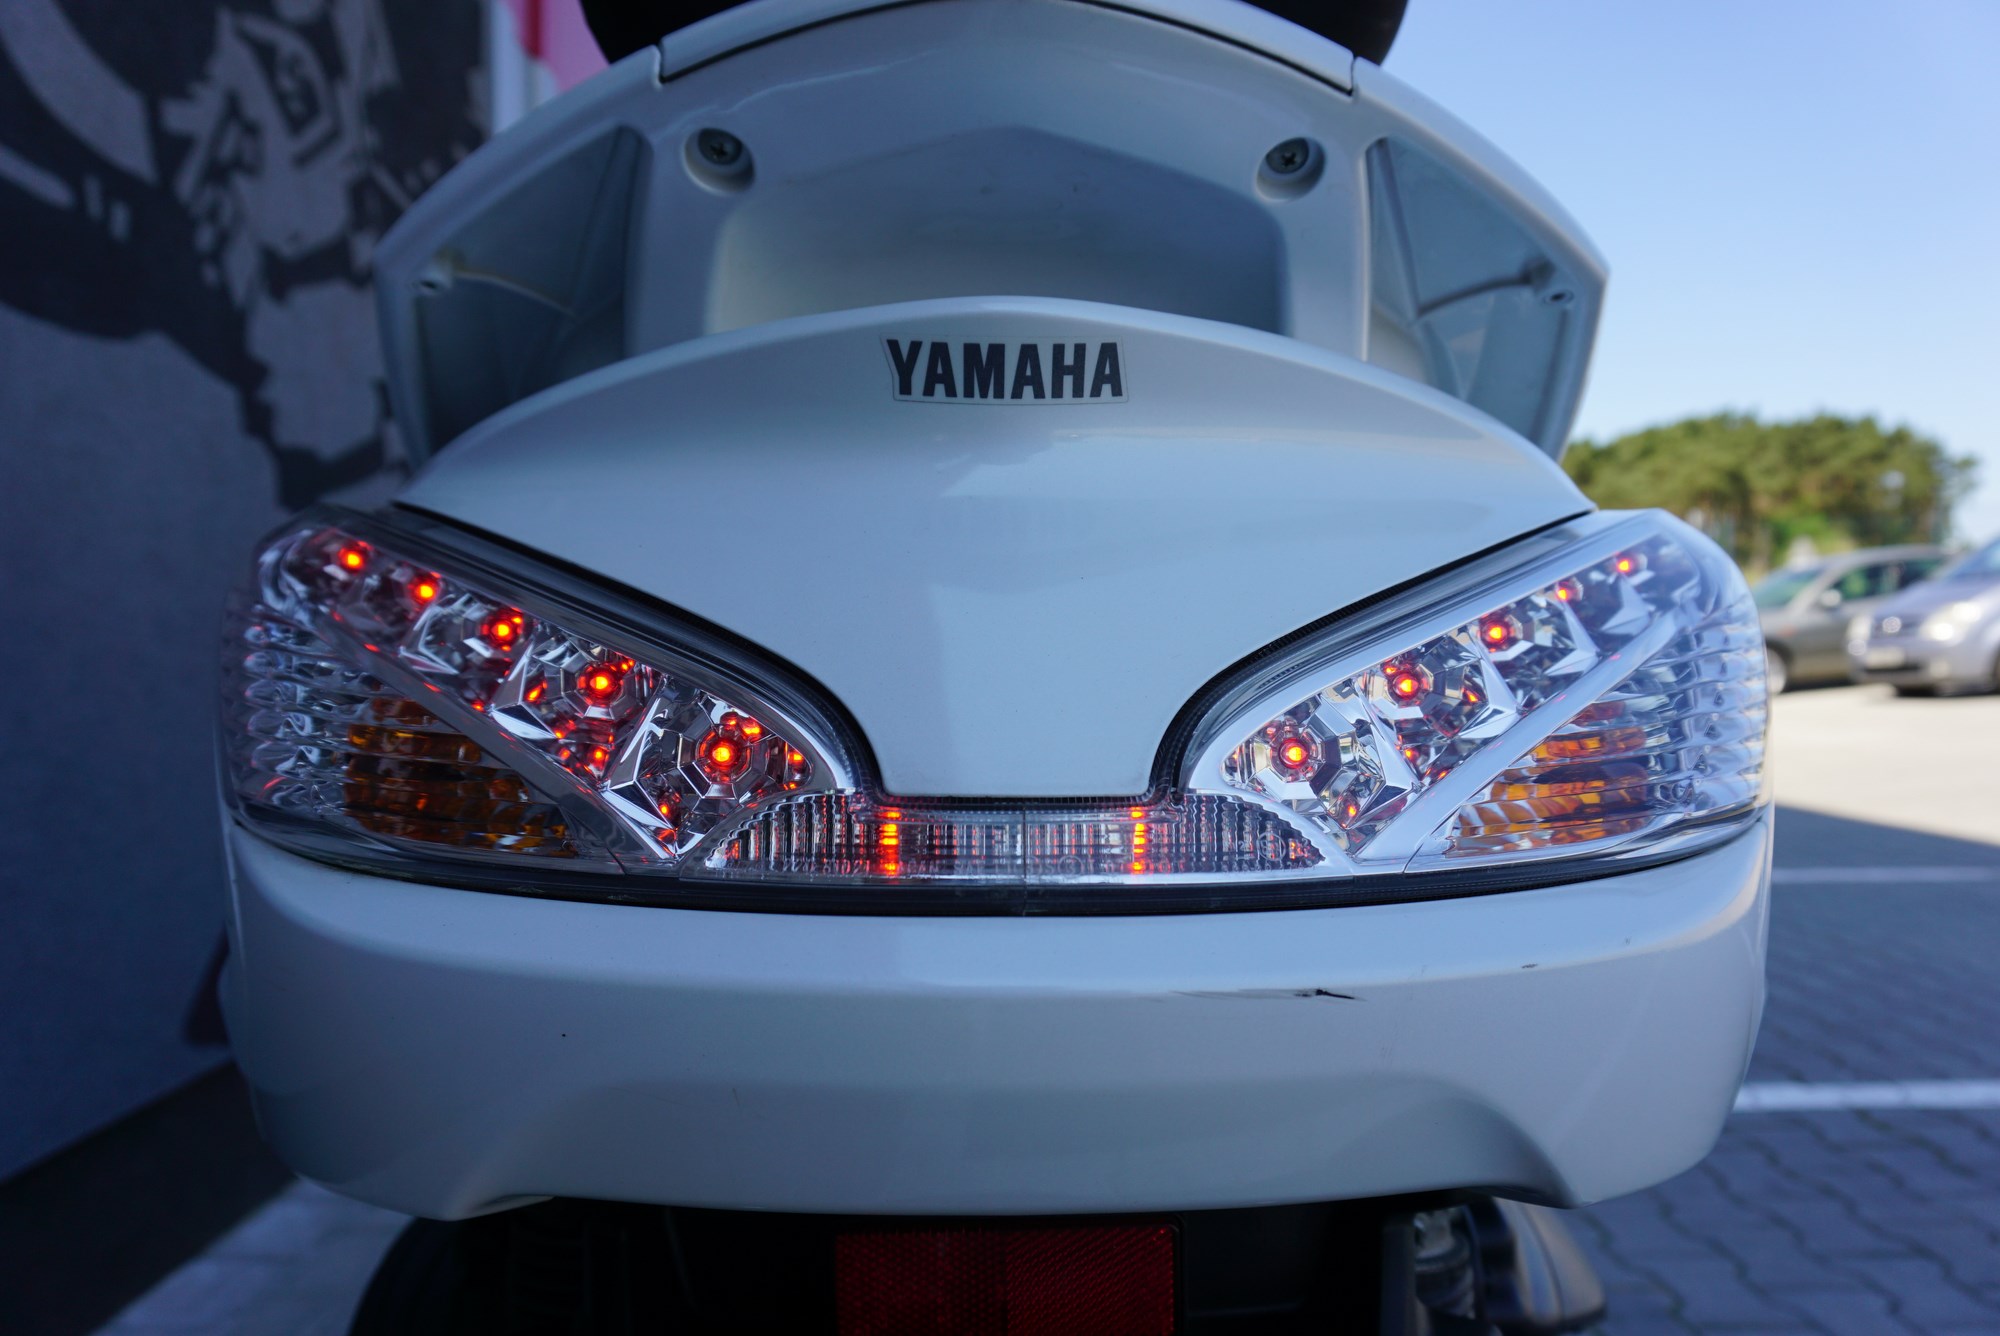 Yamaha Majesty 400 ABS